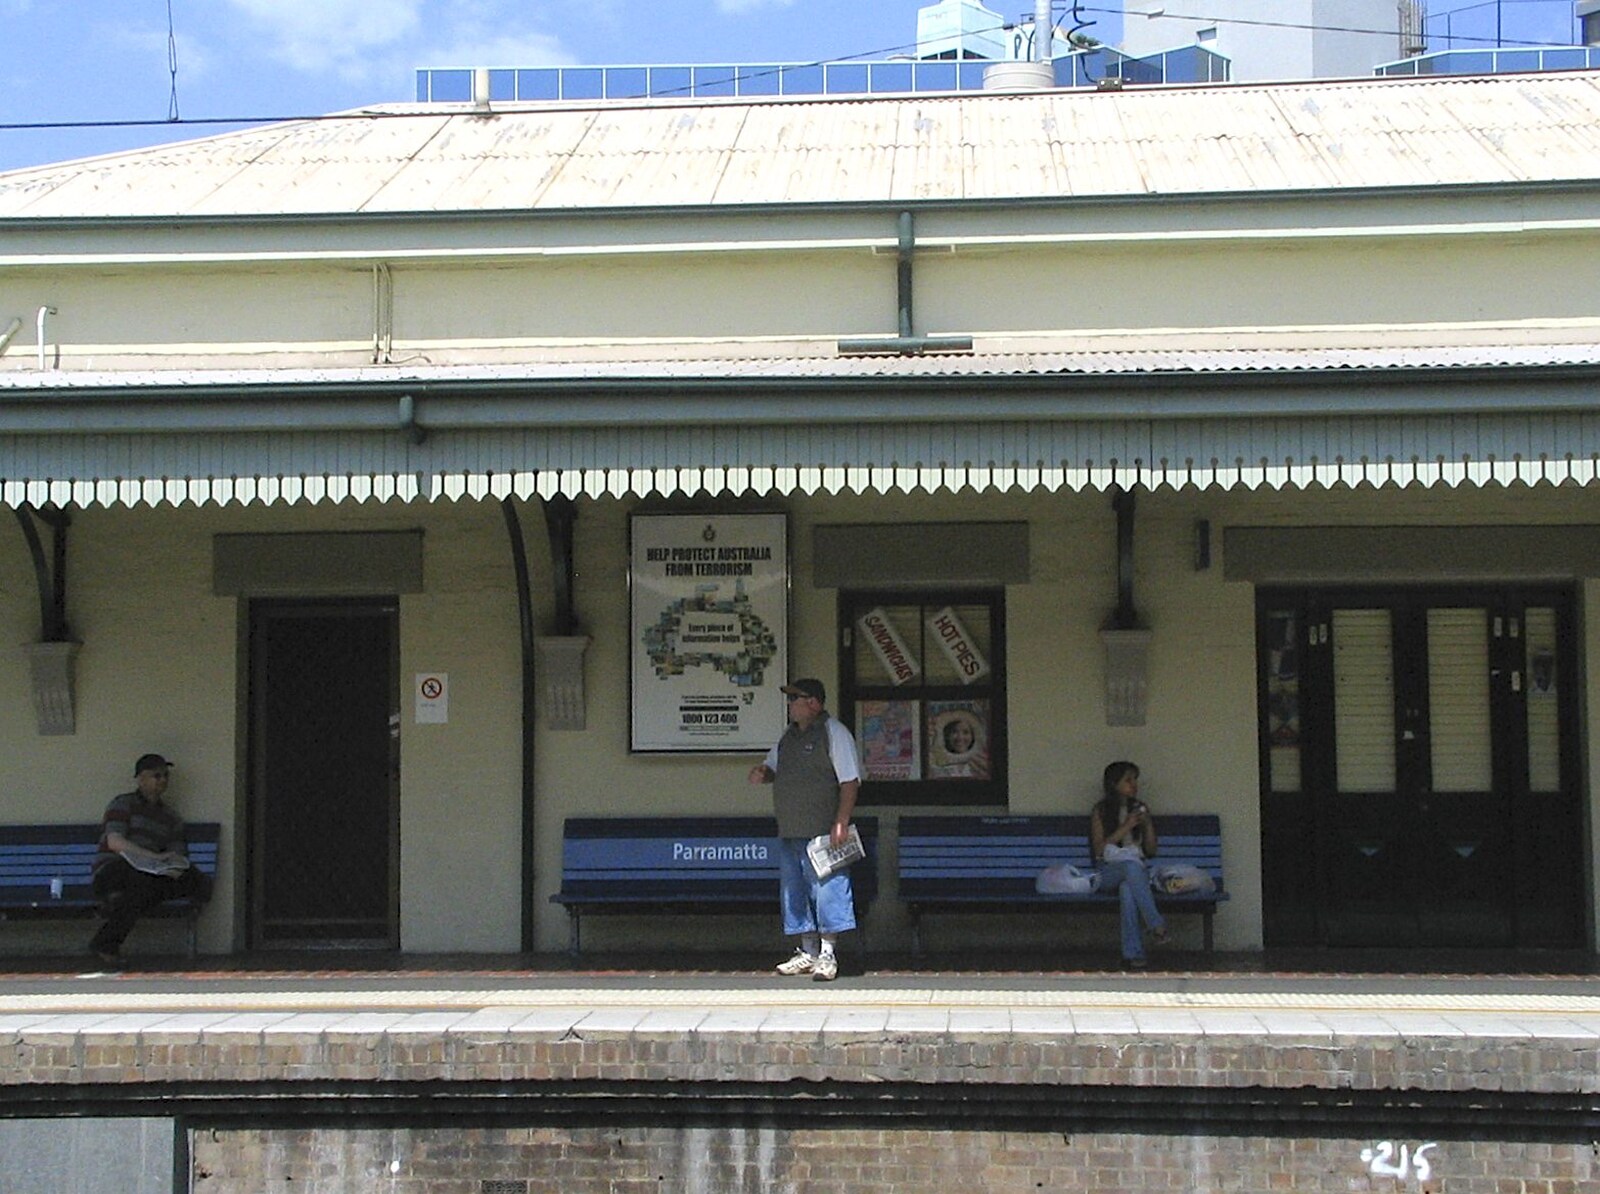 Parramatta railway station from Sydney, New South Wales, Australia - 10th October 2004